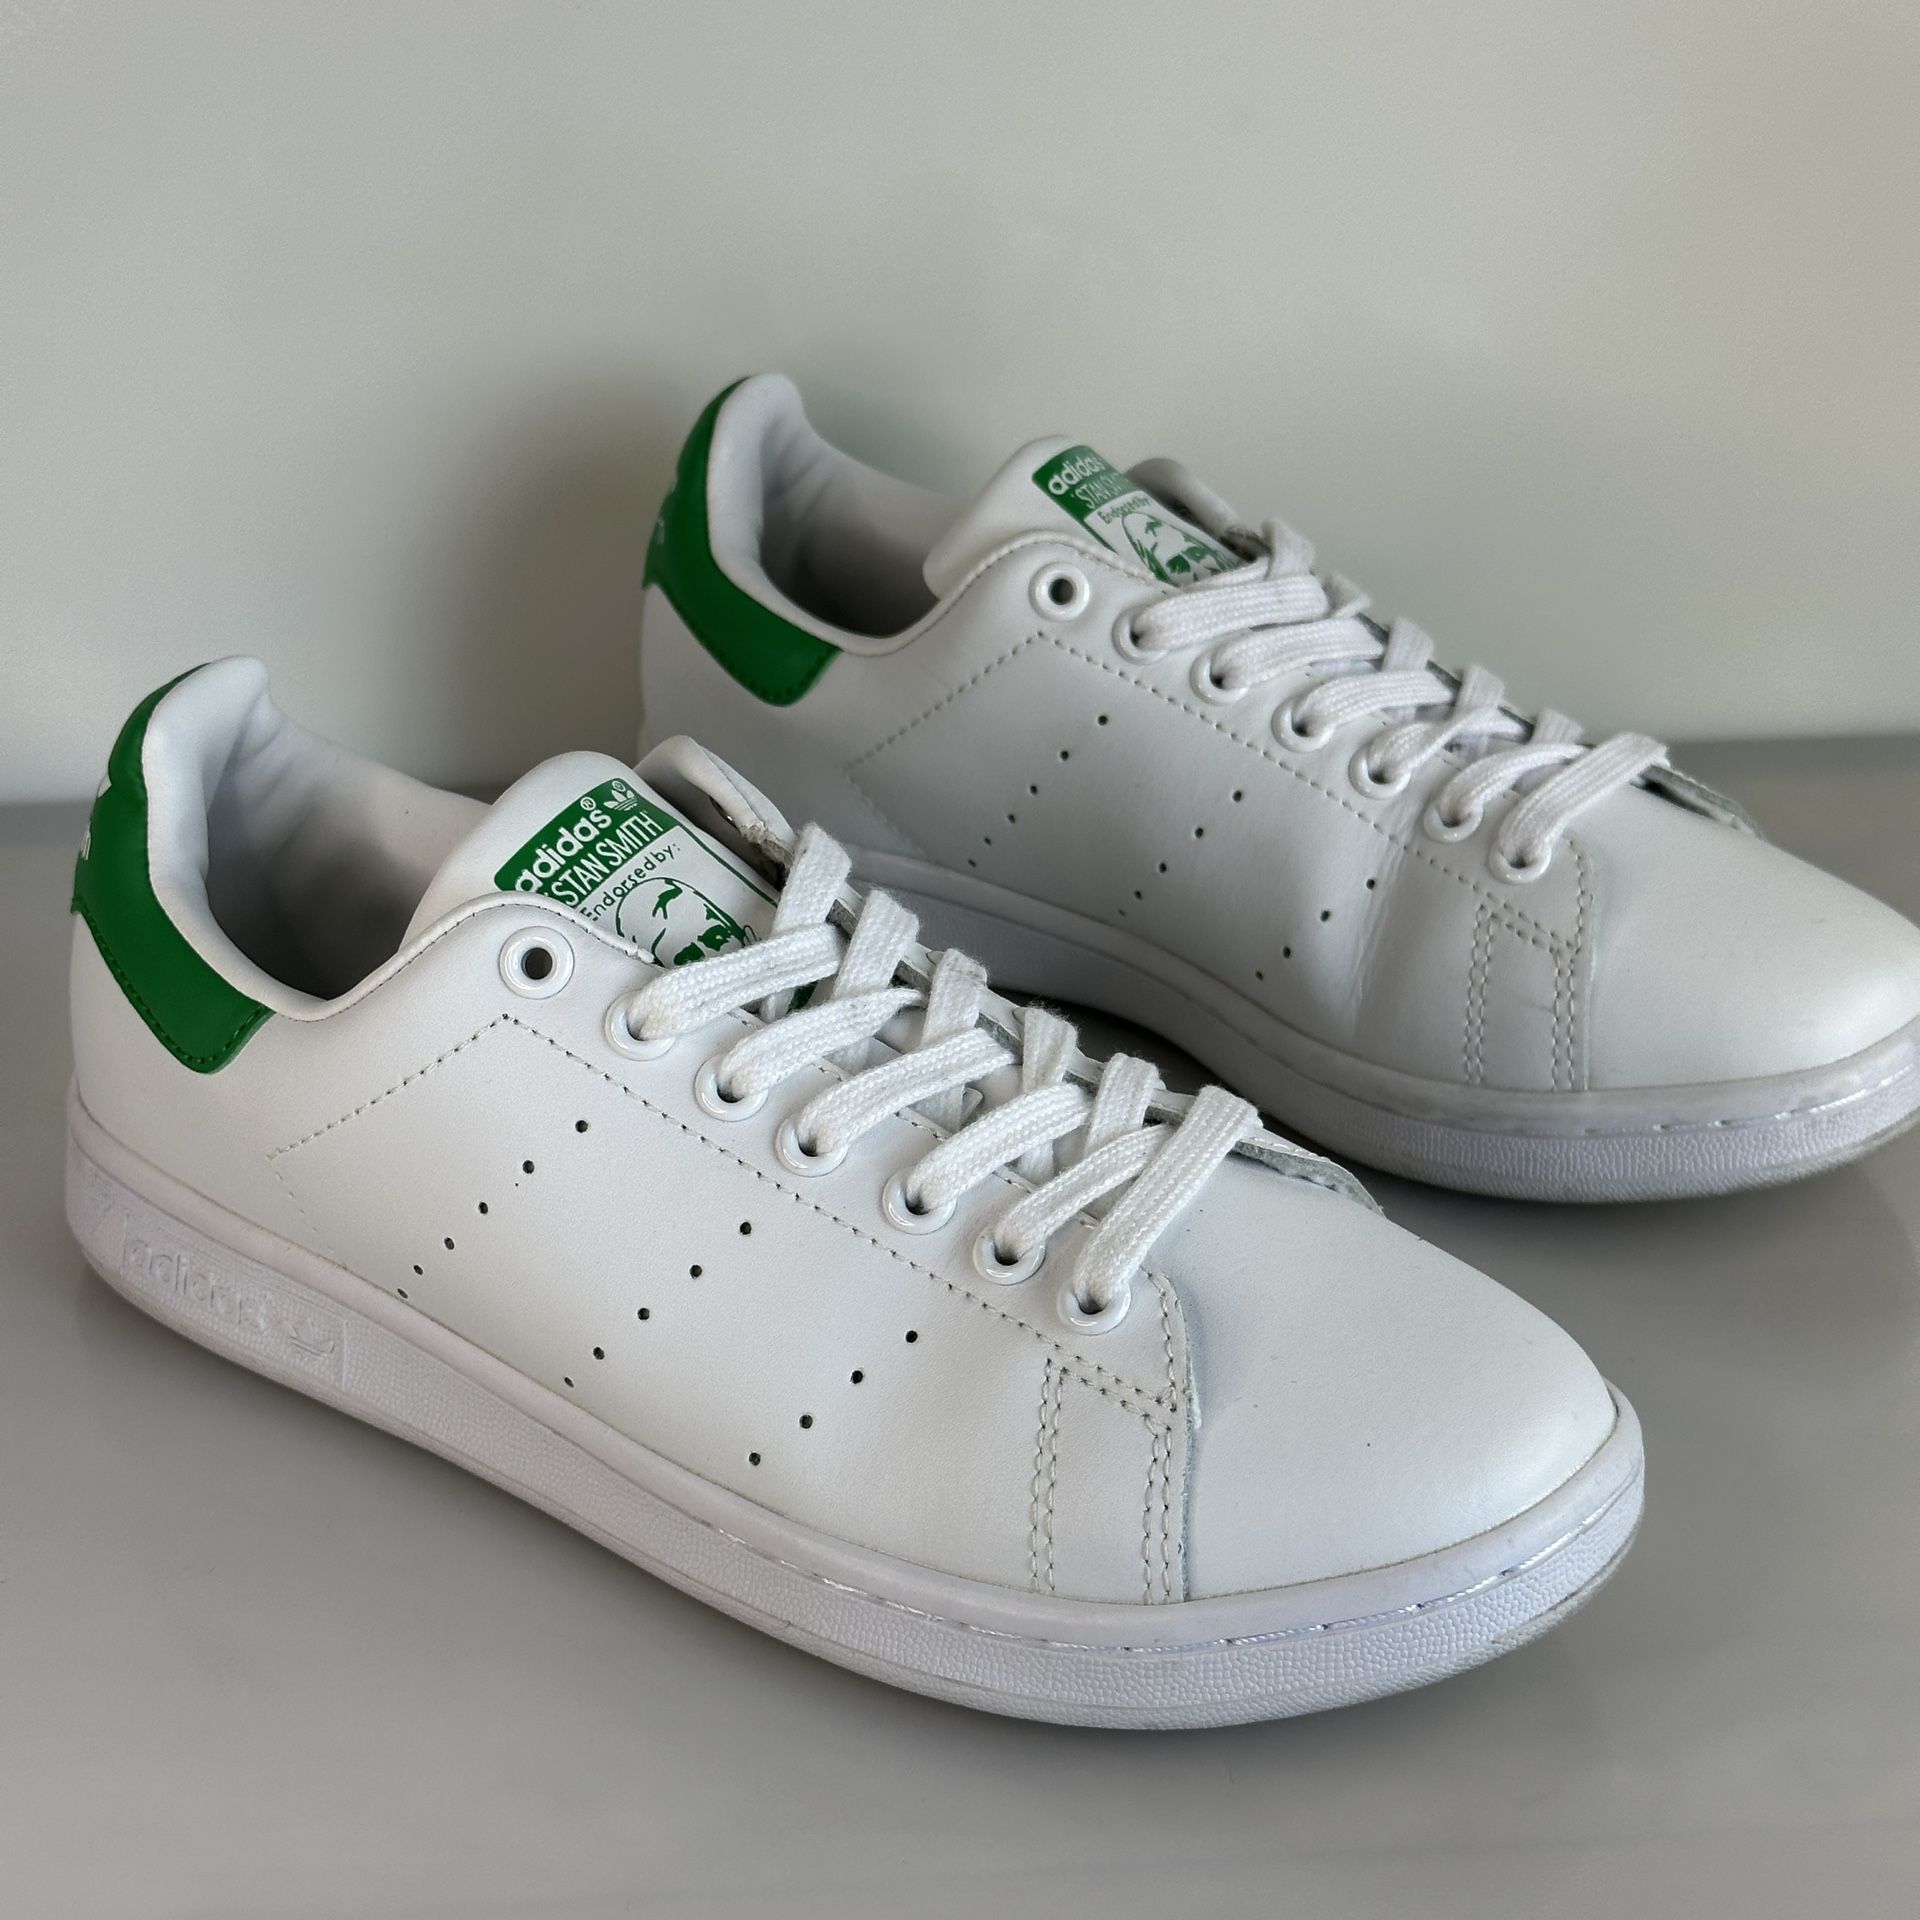 Adidas Originals Stan Smith White & Green Men's Sneakers Size 6 ART M20324 Adidas Originals Stan Smith White & Green Men's Sneakers Size 6 ART M20324